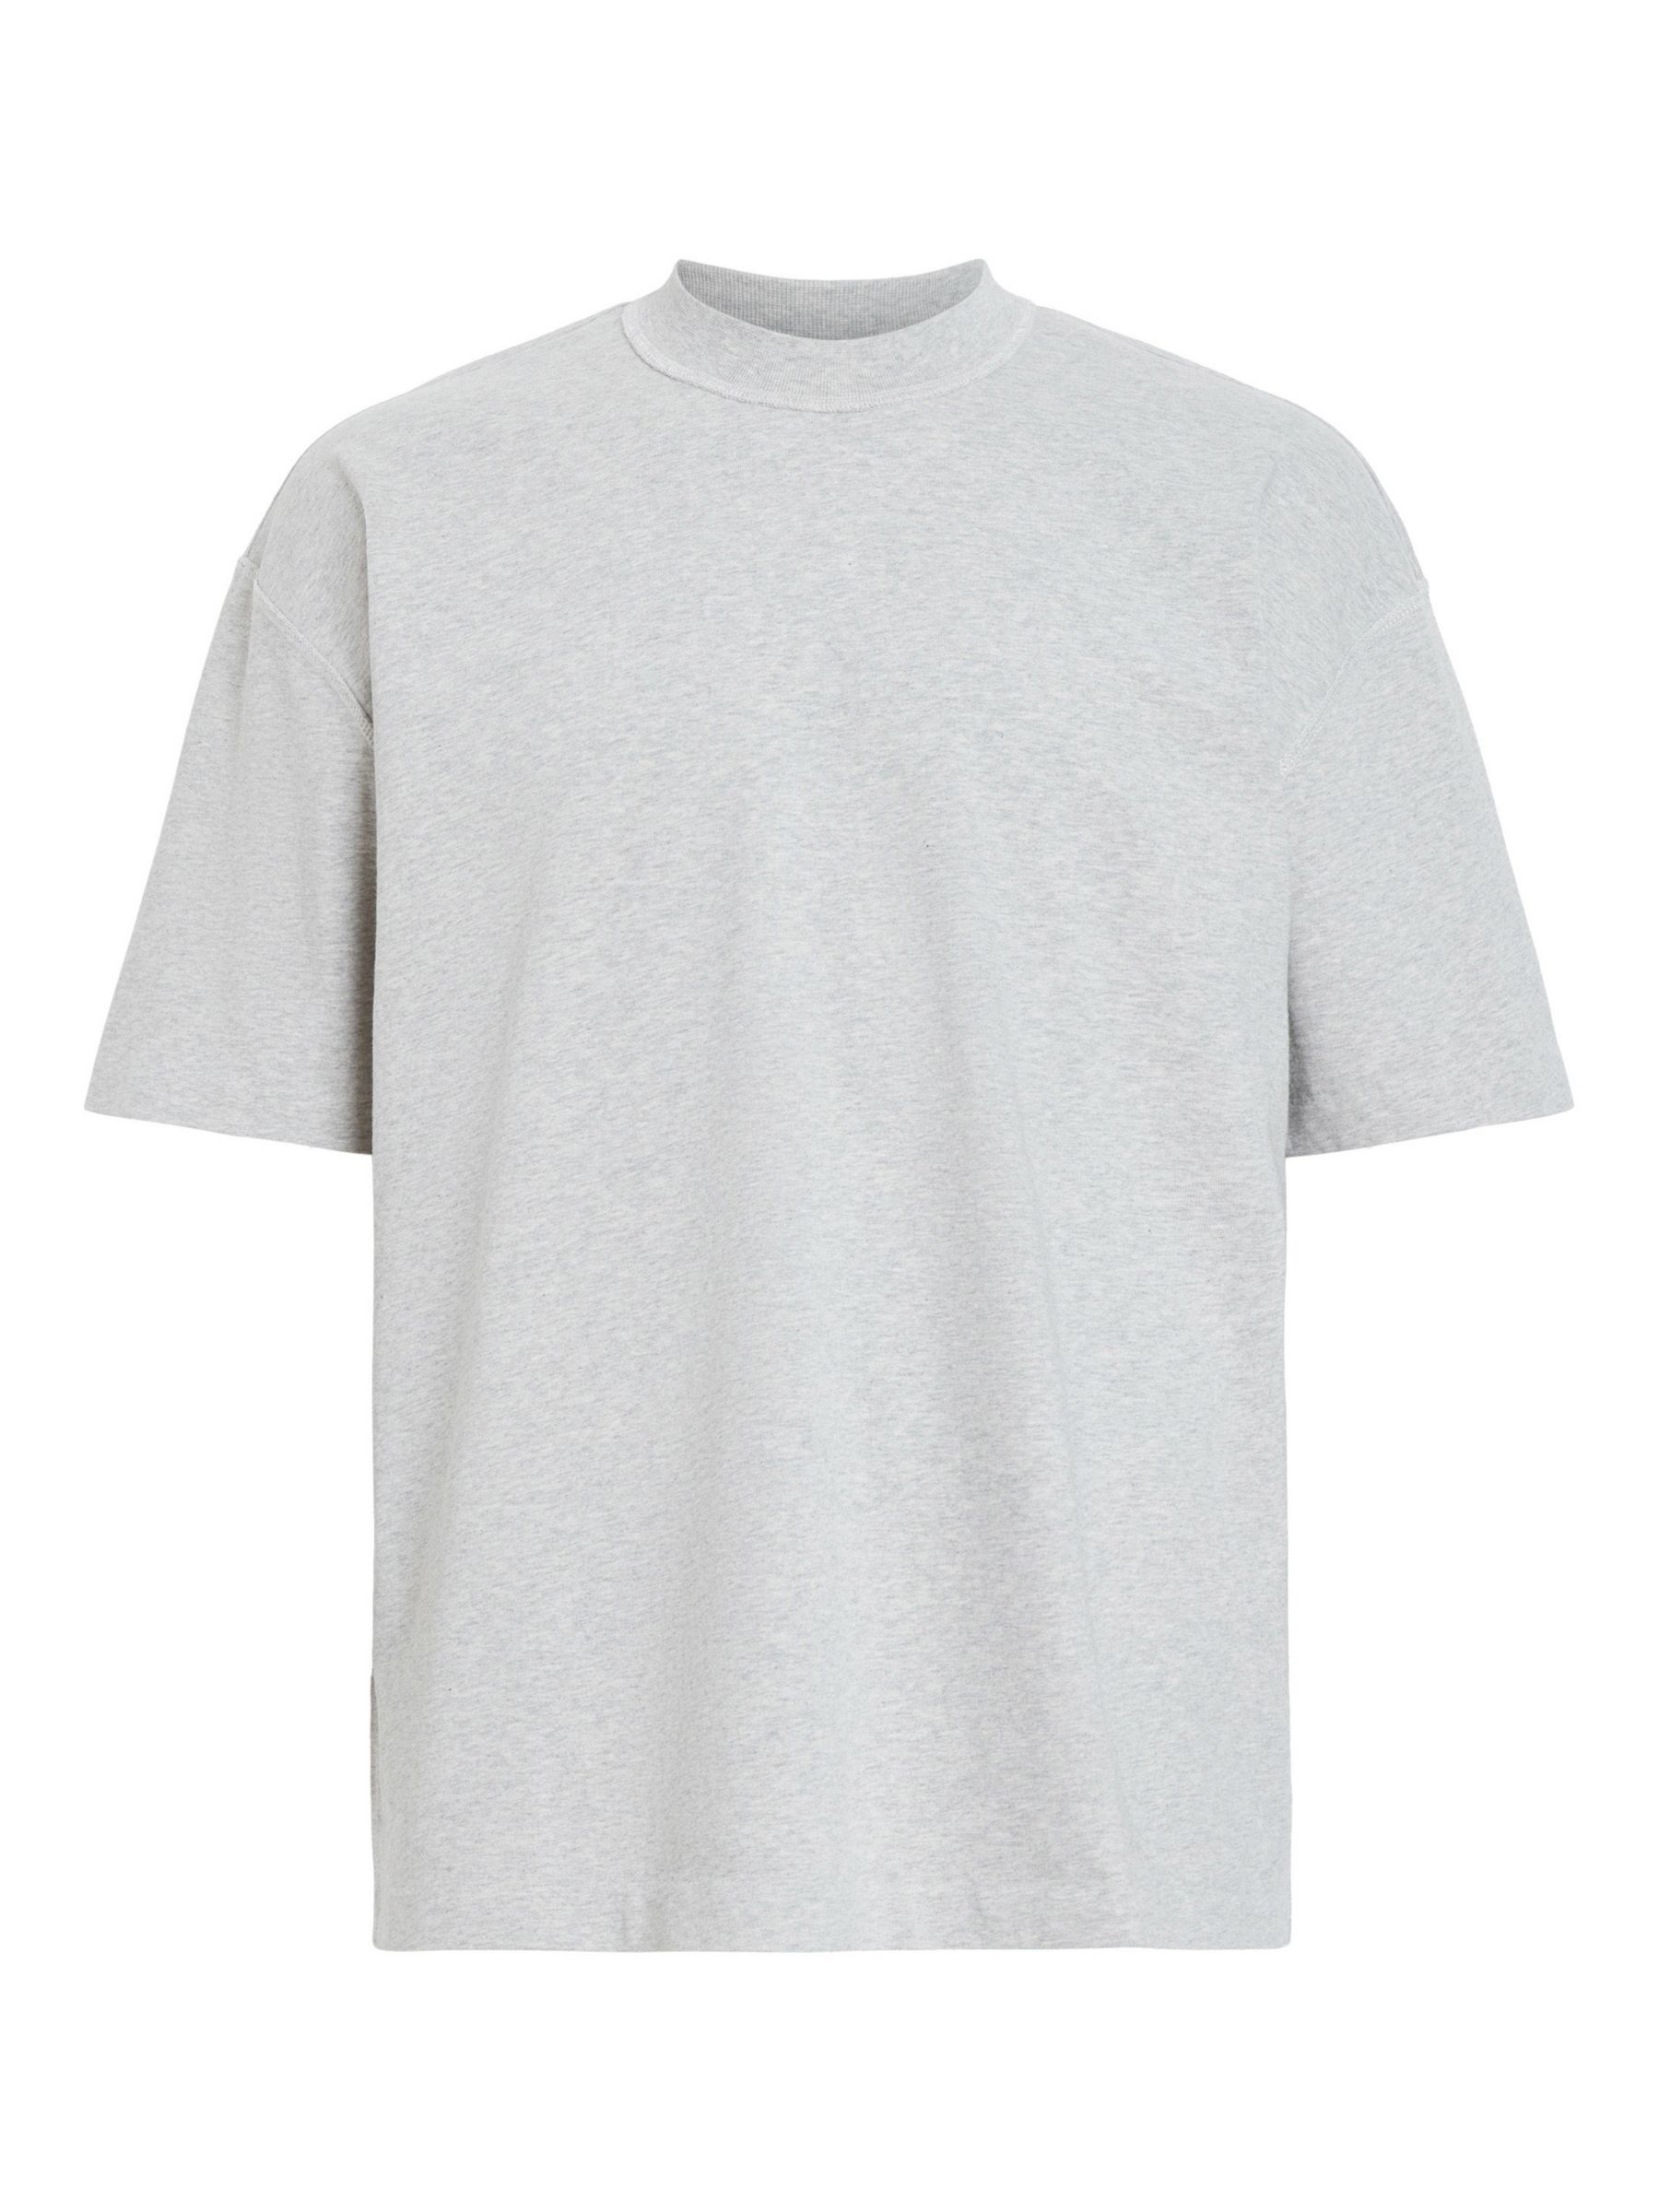 AllSaints Isac Short Sleeve Crew Neck T-Shirt, Grey Marl, L